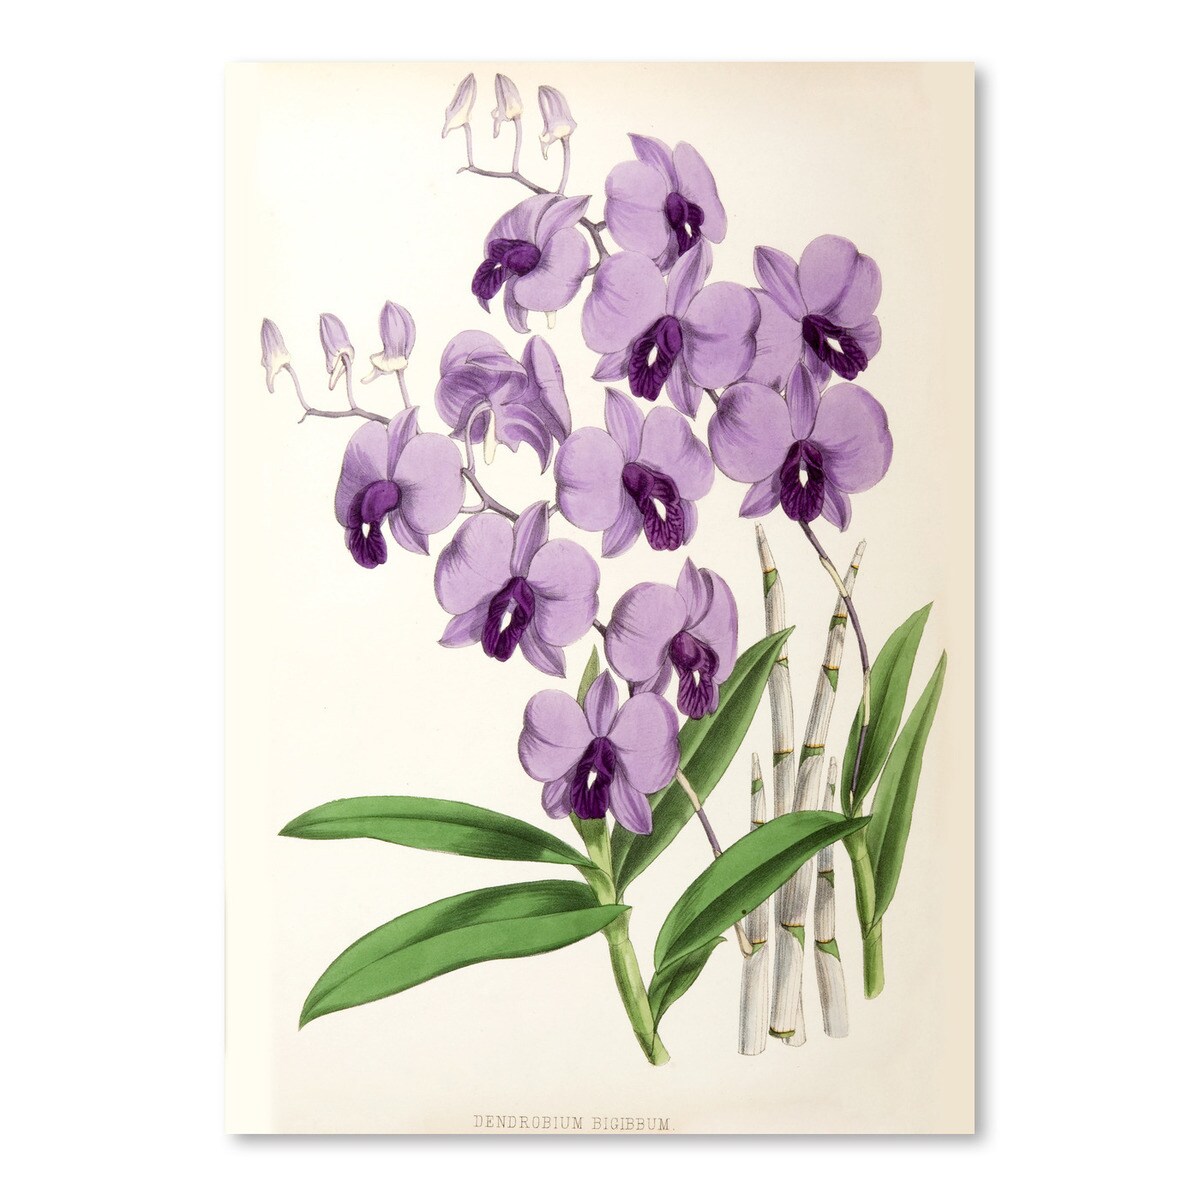 Fitch Orchid Dendrobium Bigibbum by New York Botanical Garden  Poster Art Print - Americanflat